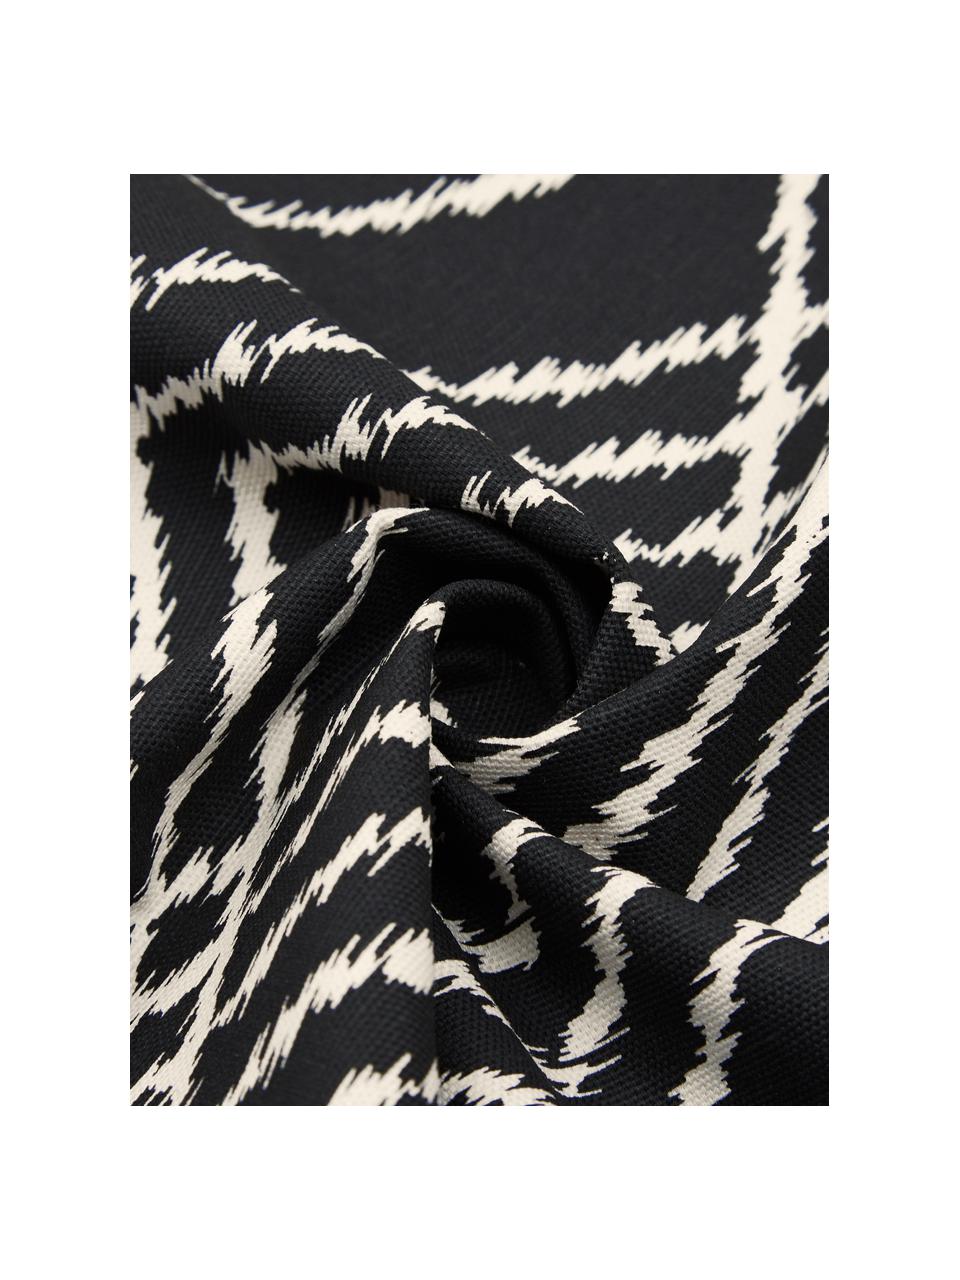 Boho kussenhoes Jax in zwart/ecru, 100% katoen, Wit, zwart, 45 x 45 cm